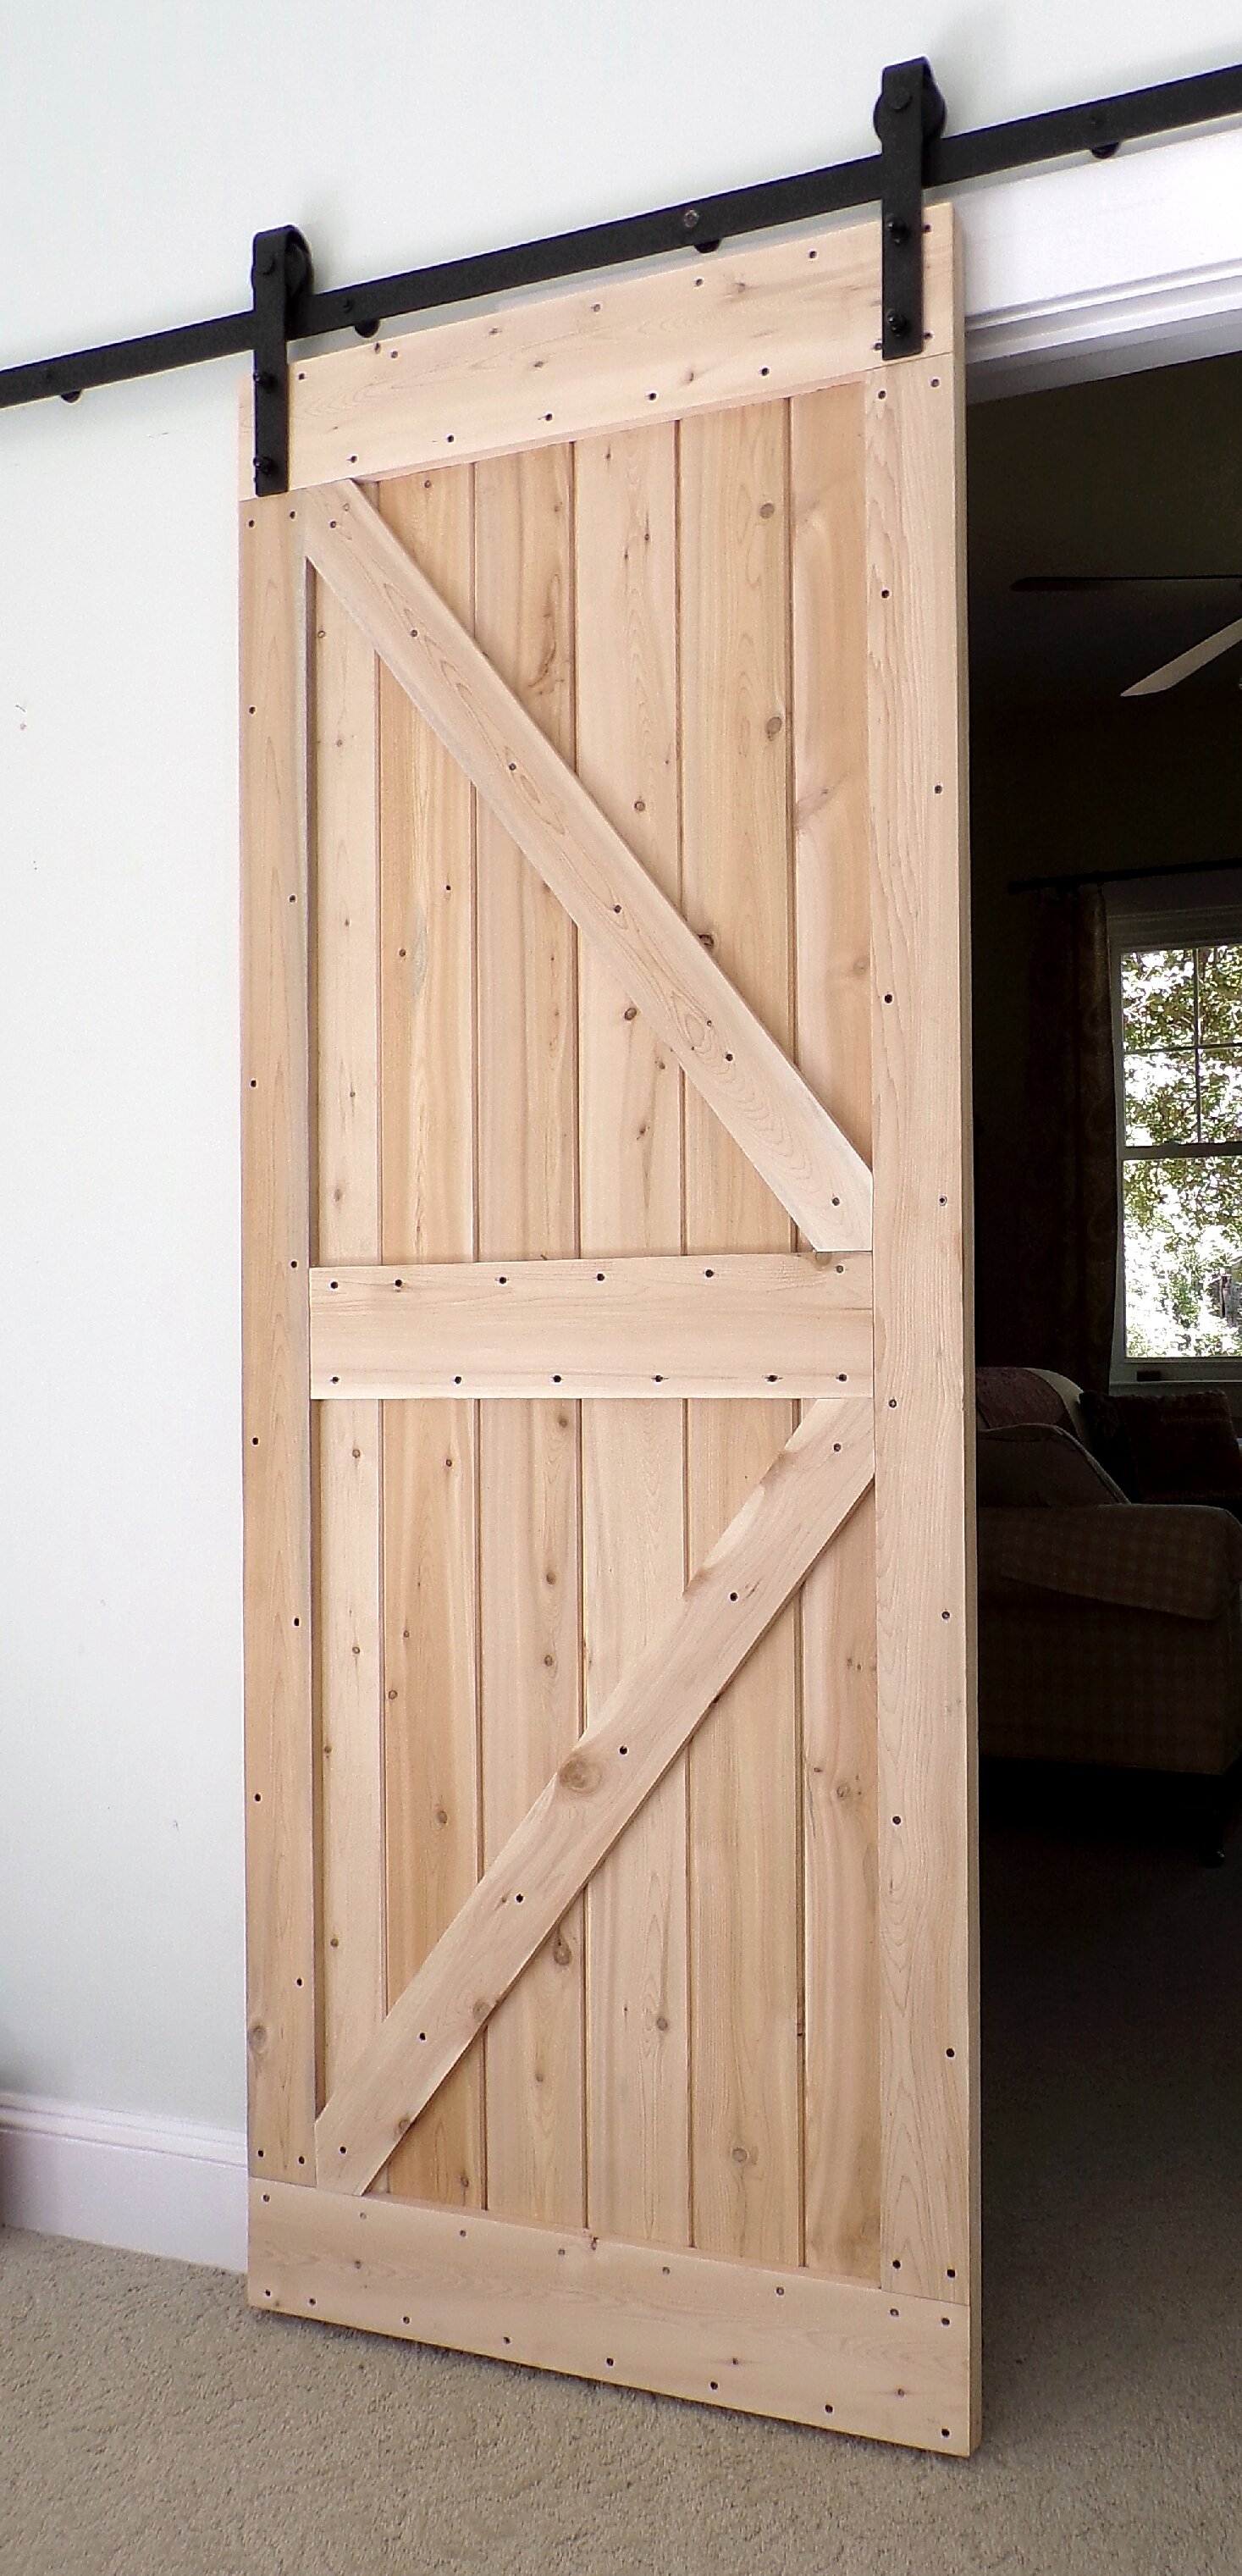 Barharborcedar Paneled Wood Finish Barn Door Without Installation Hardware Kit Reviews Wayfair